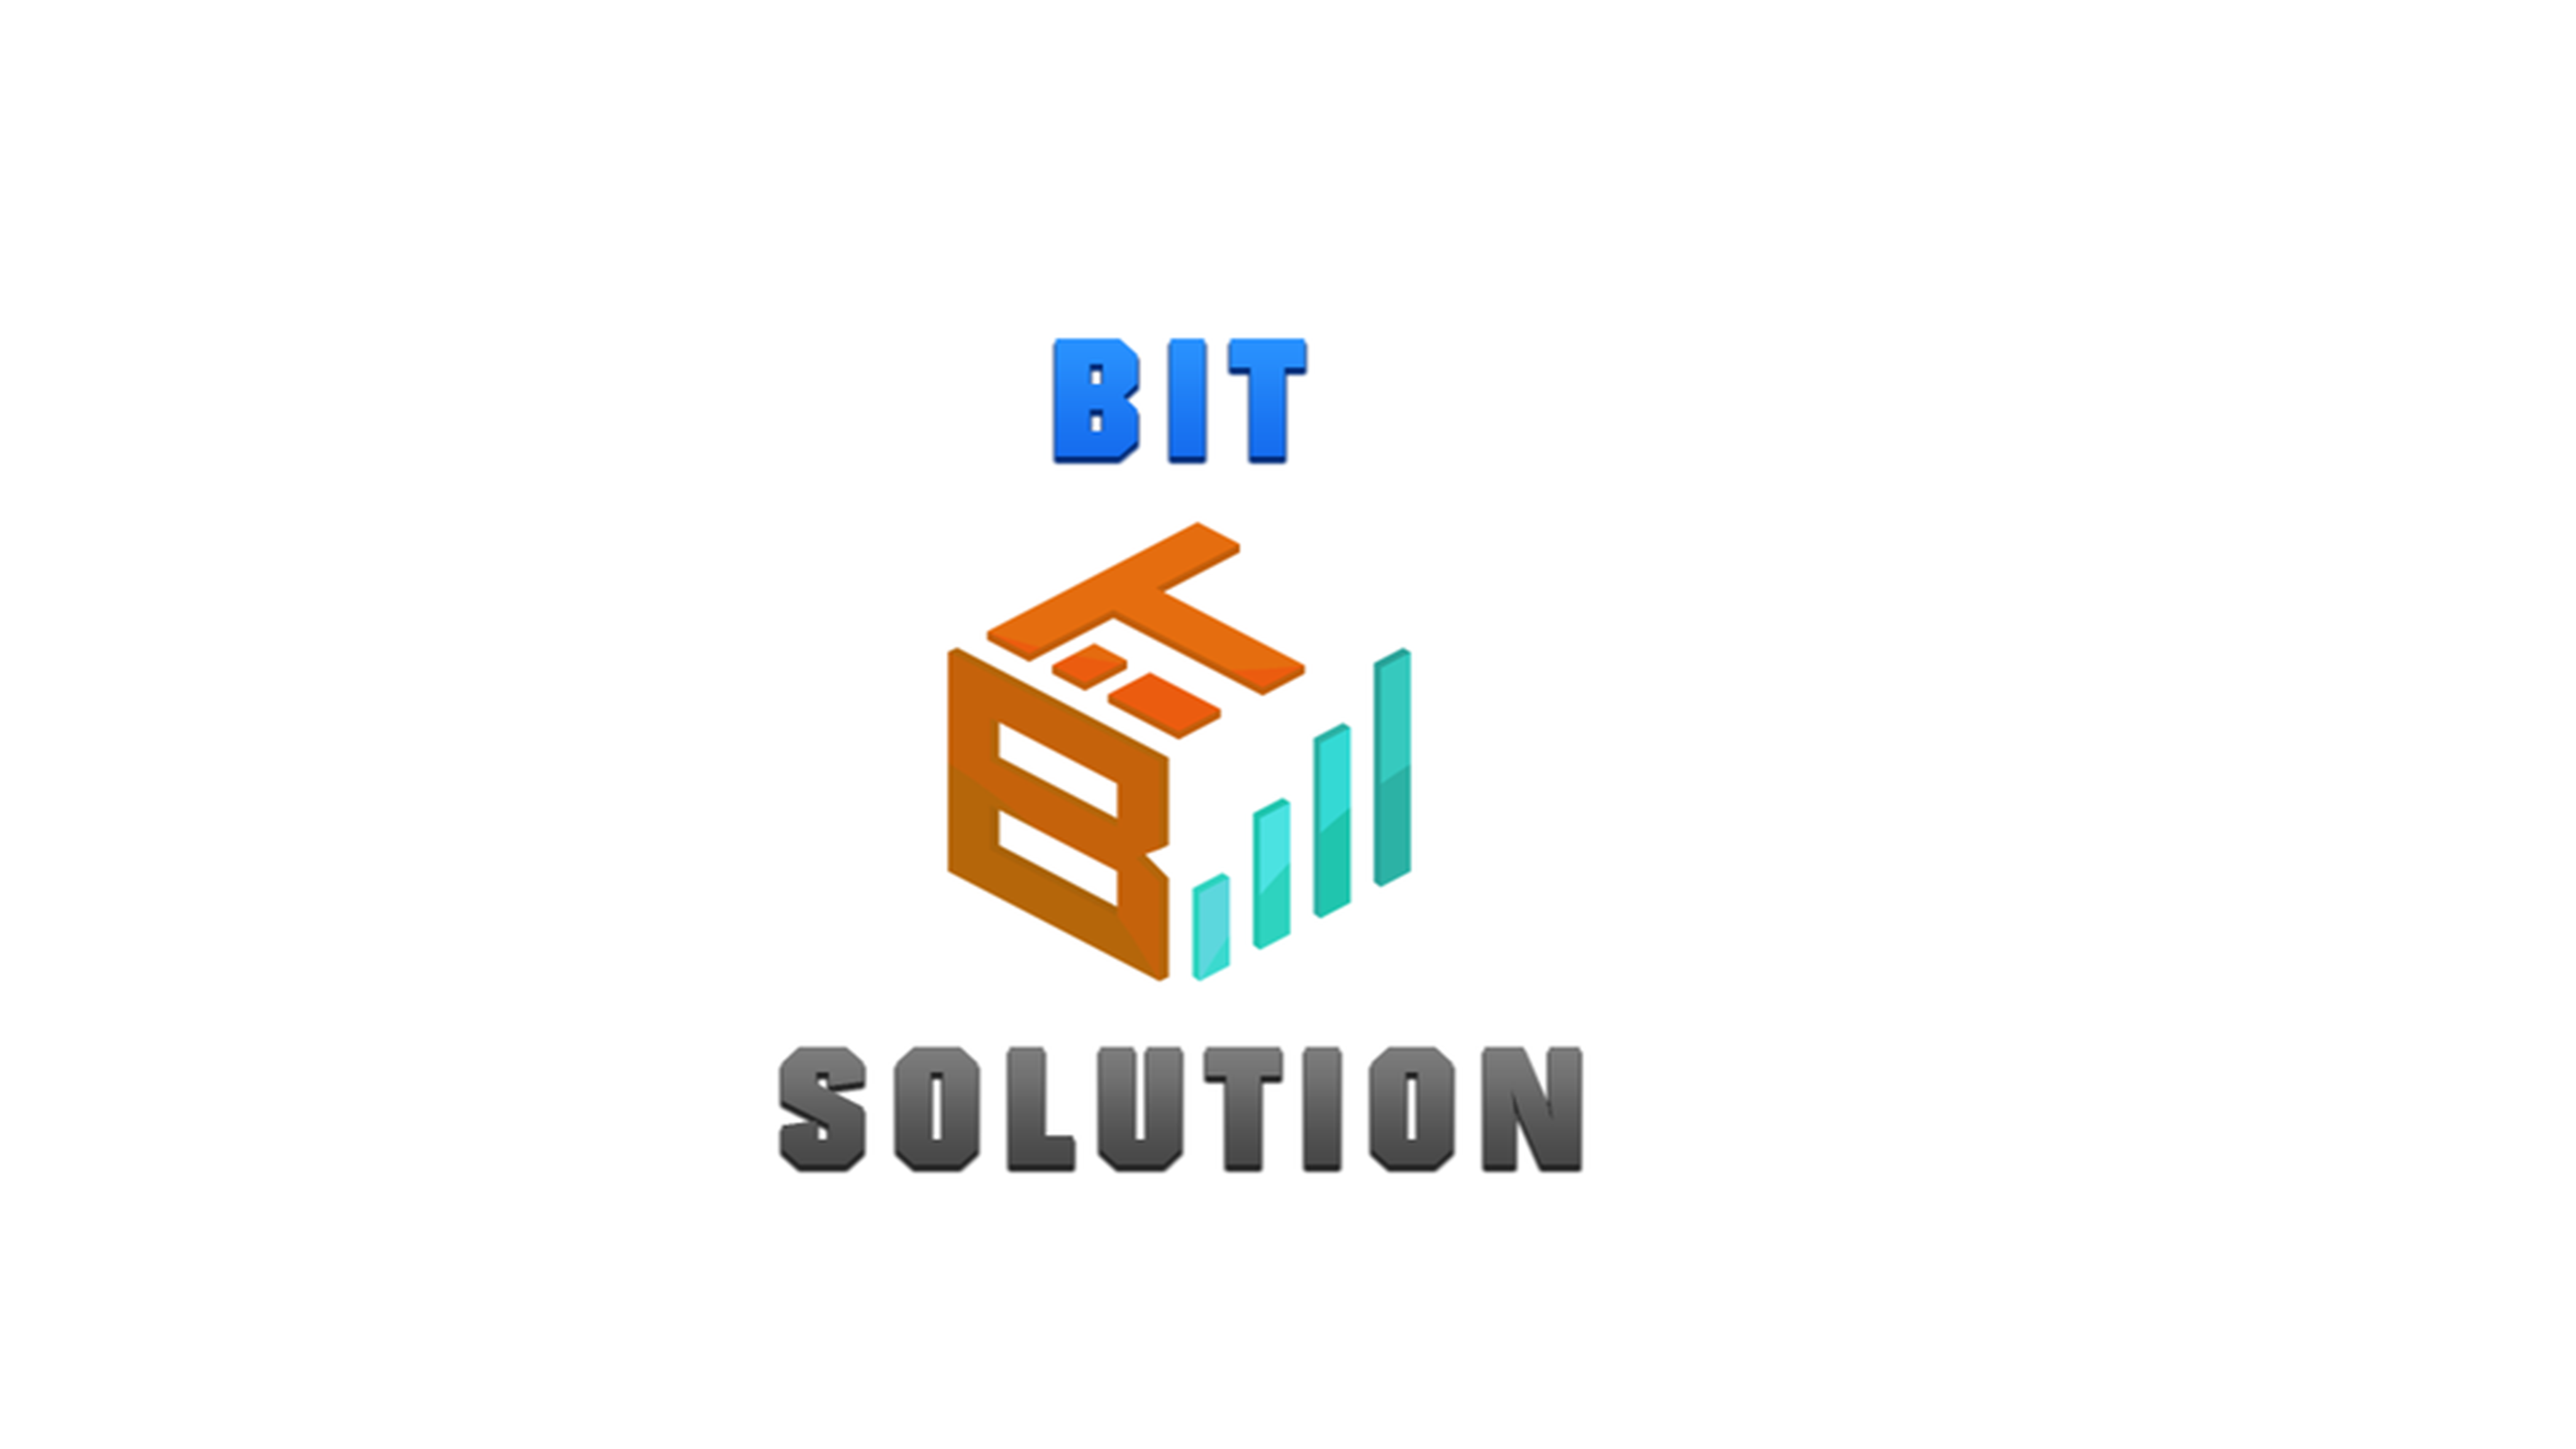 Bit solutions